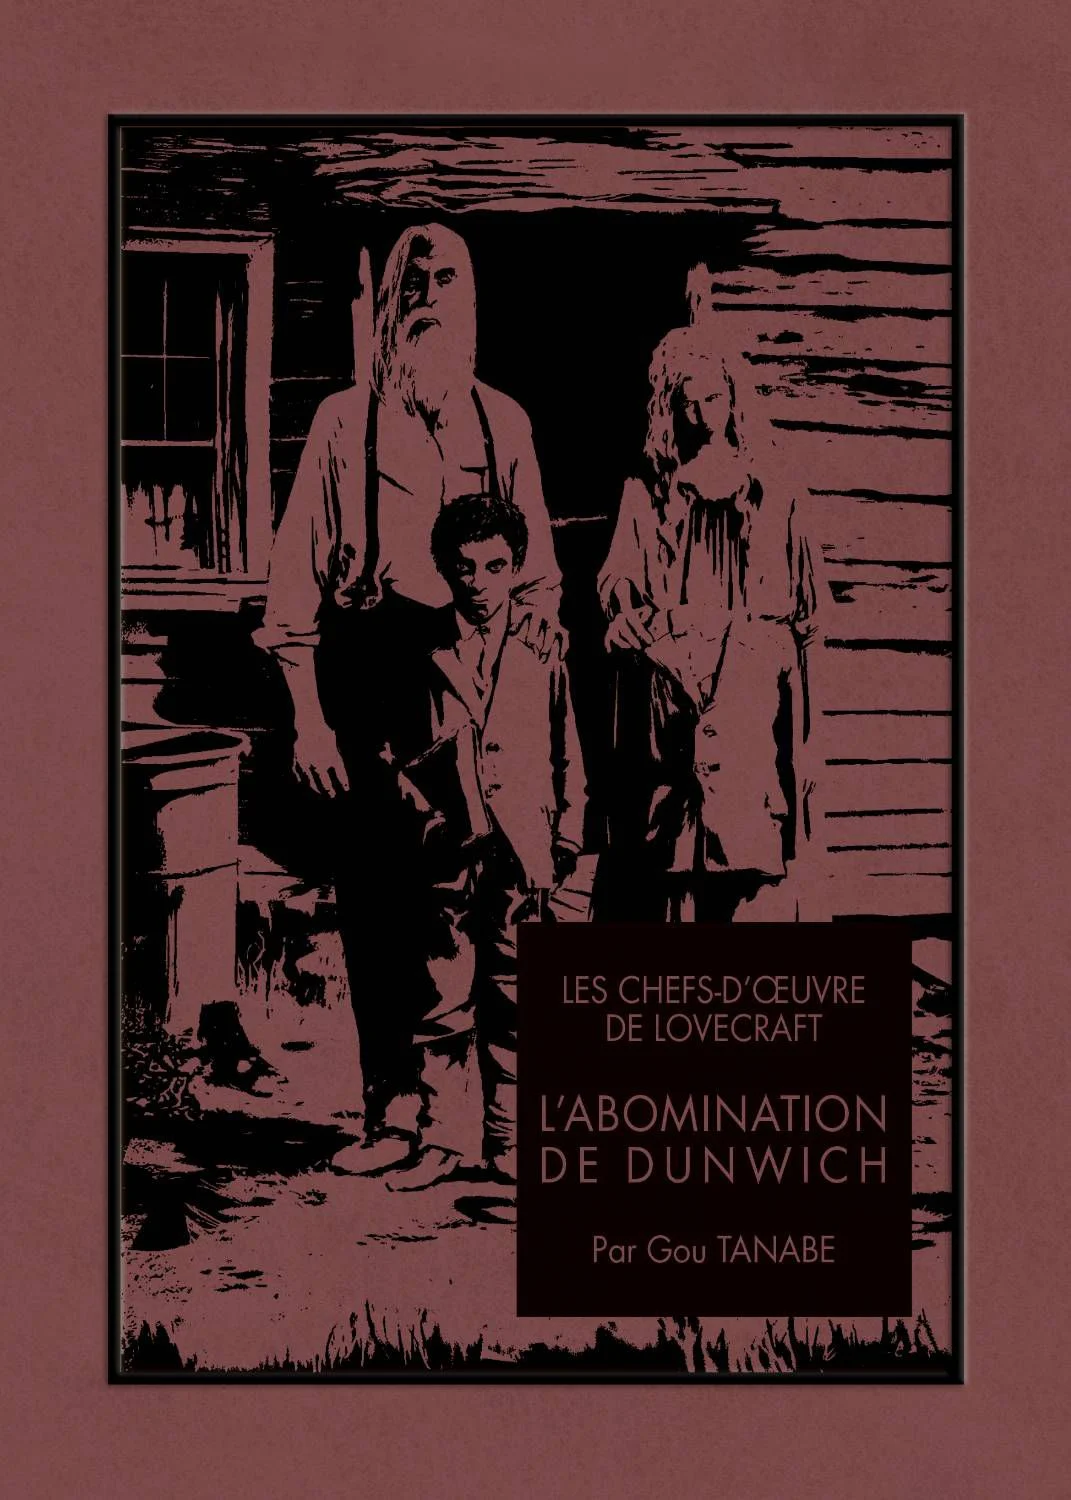 L’abomination de Dunwich adapté par Gou Tanabe